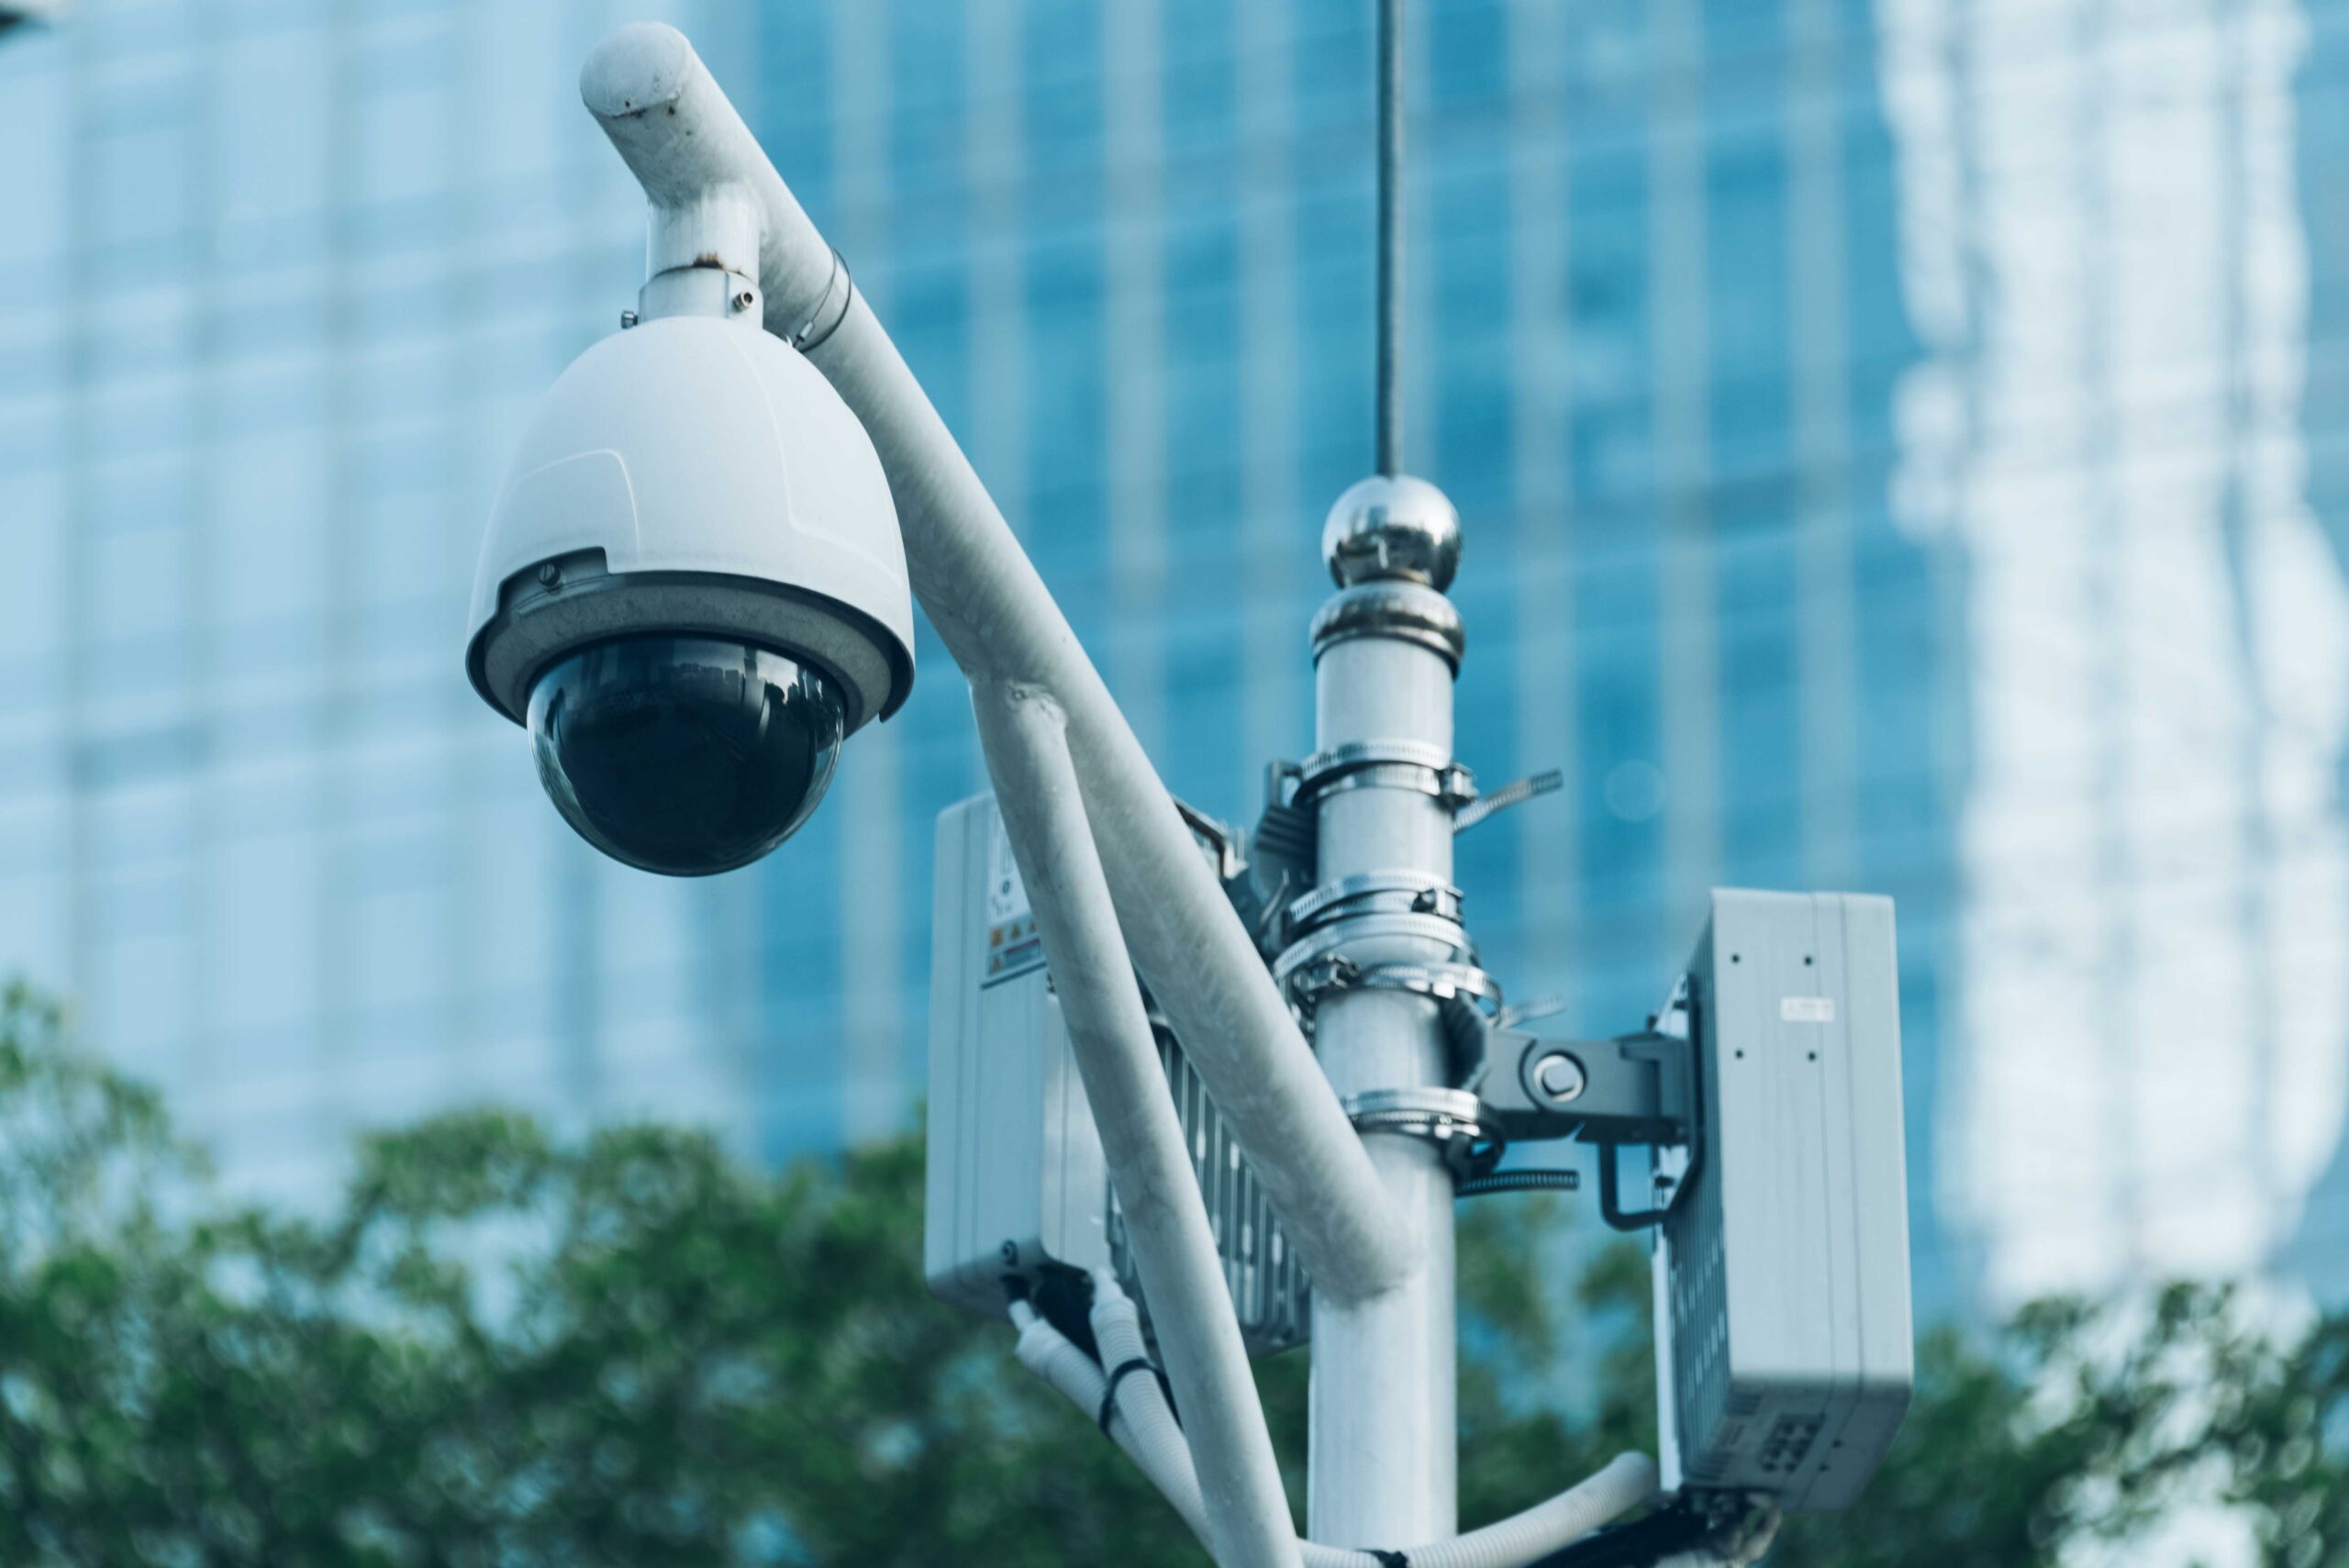 Vigil World - surveilliance security camera